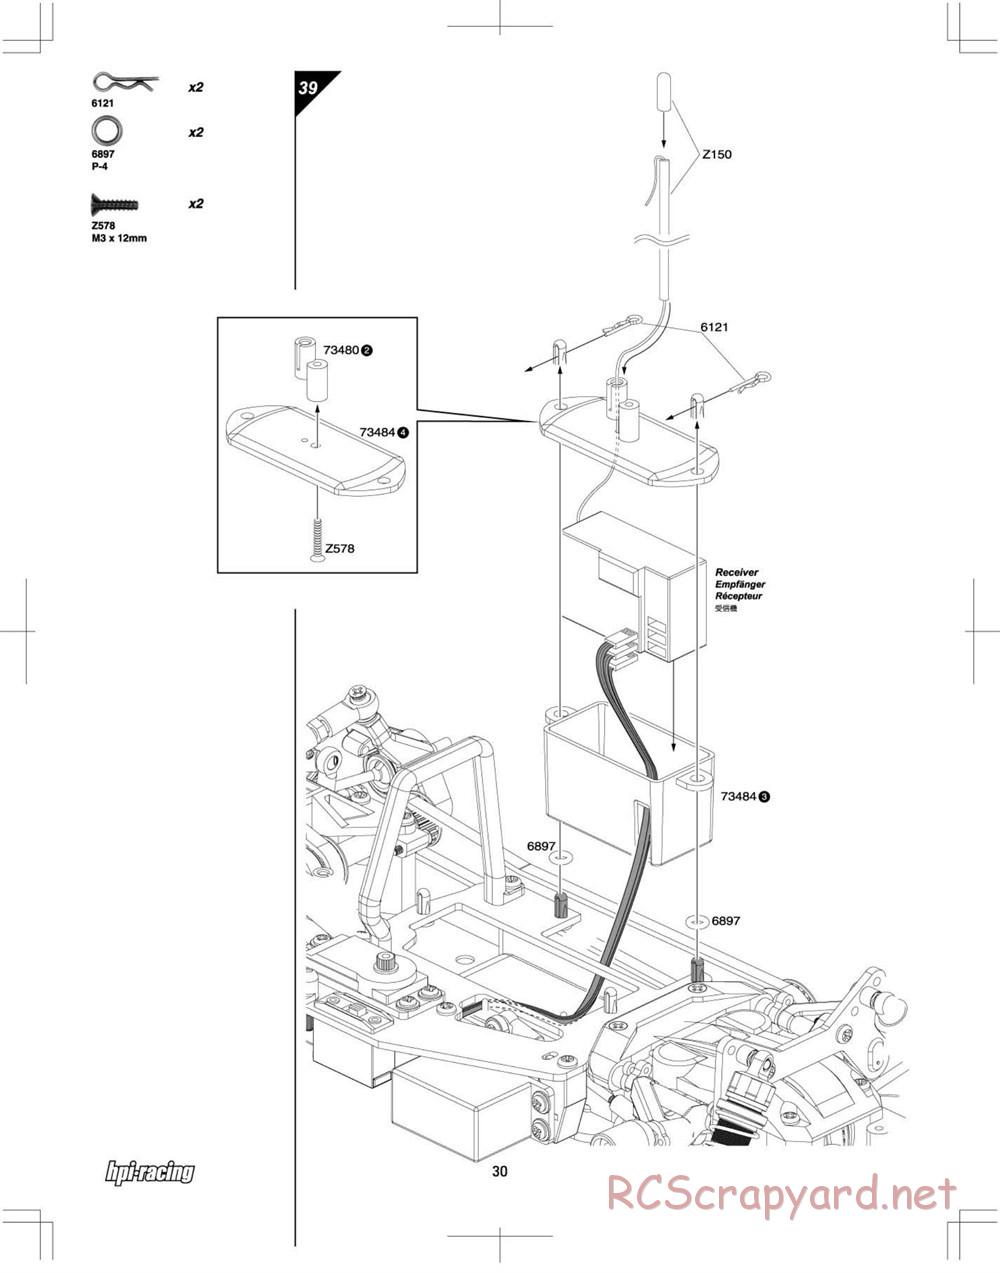 HPI - R40 Nitro Touring Car - Manual - Page 30